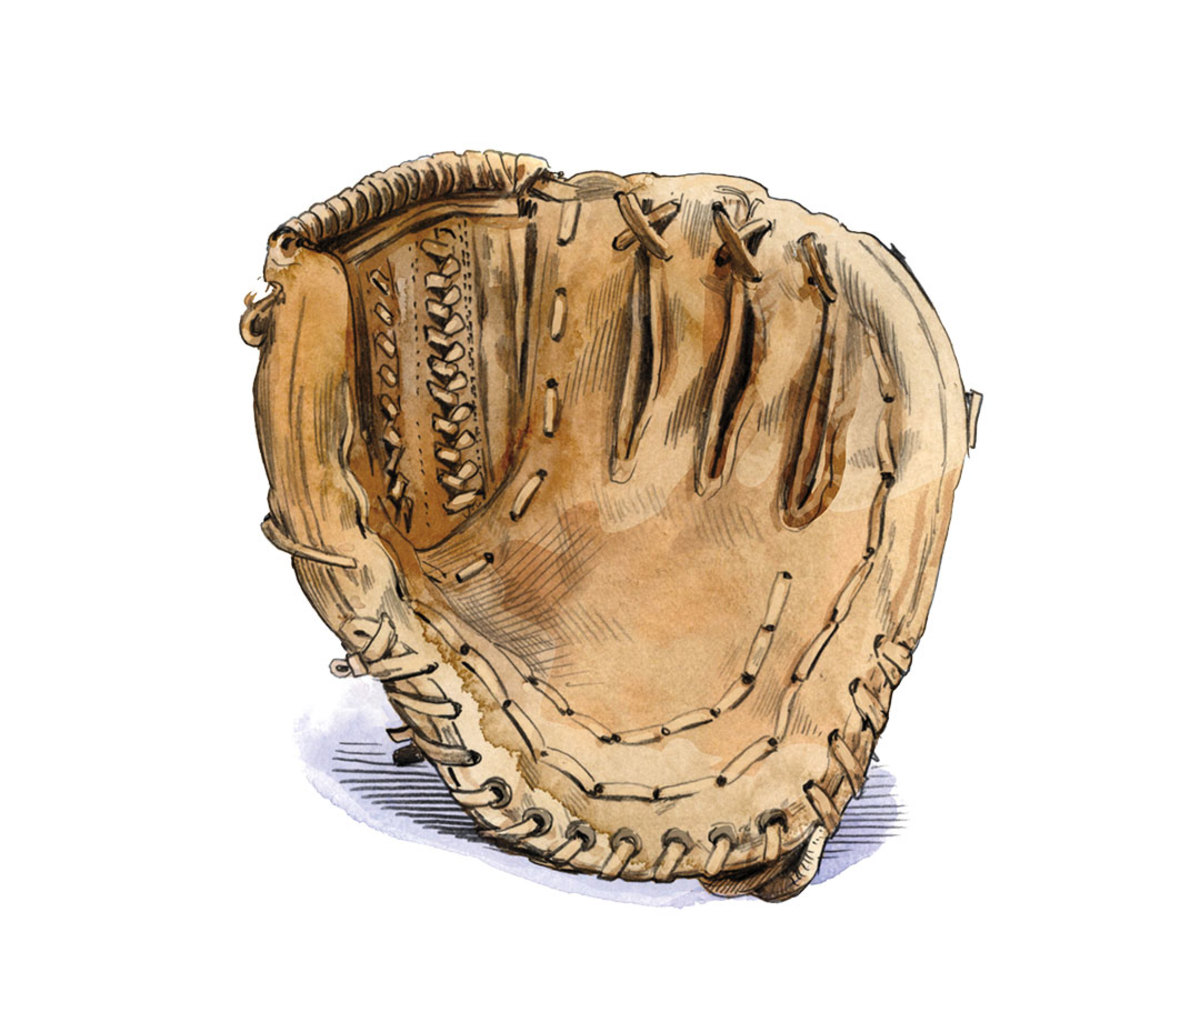 Illustration of baseball glove